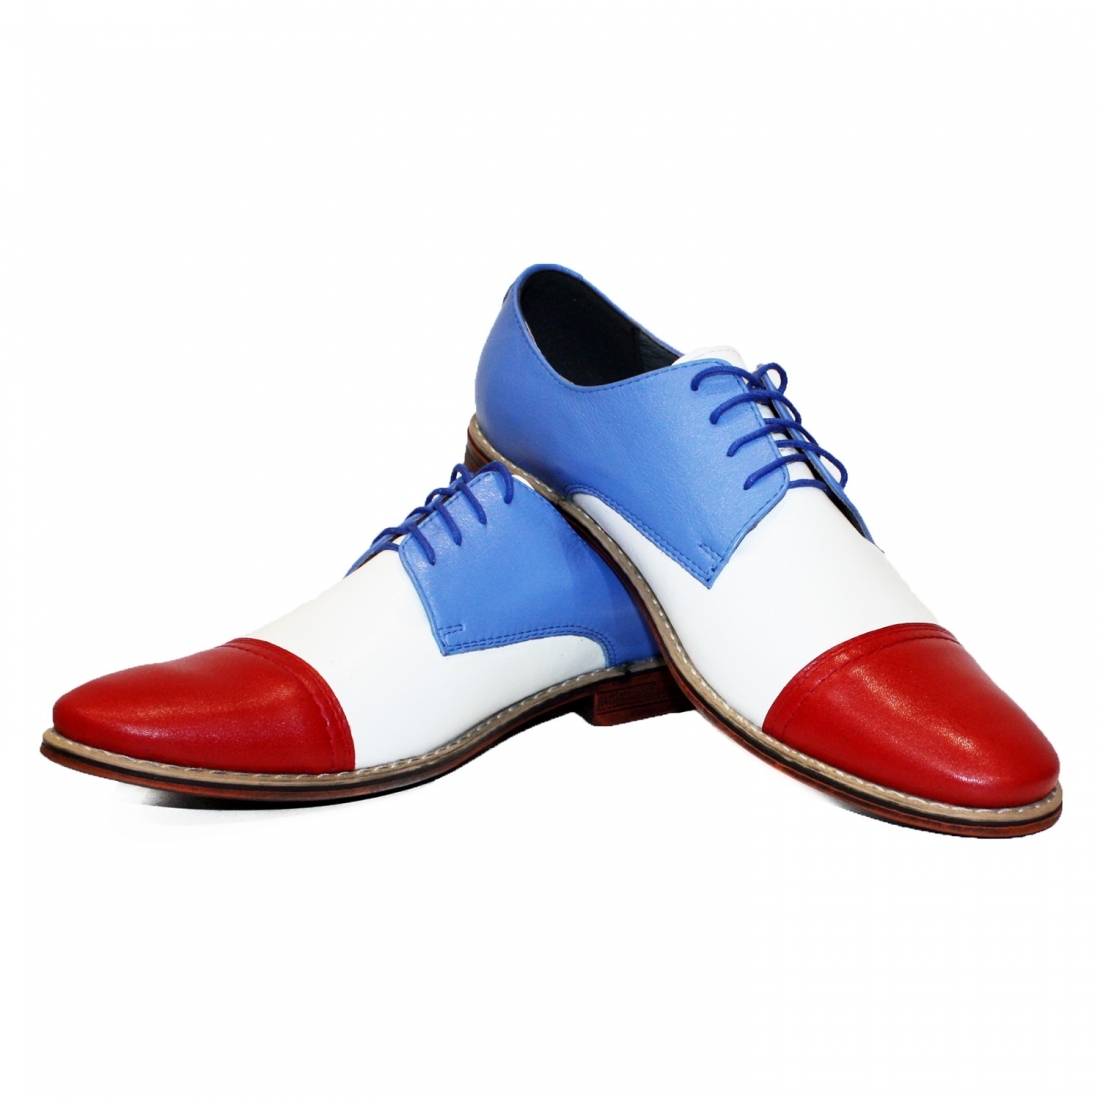 Modello Gylotto - Buty Klasyczne - Handmade Colorful Italian Leather Shoes